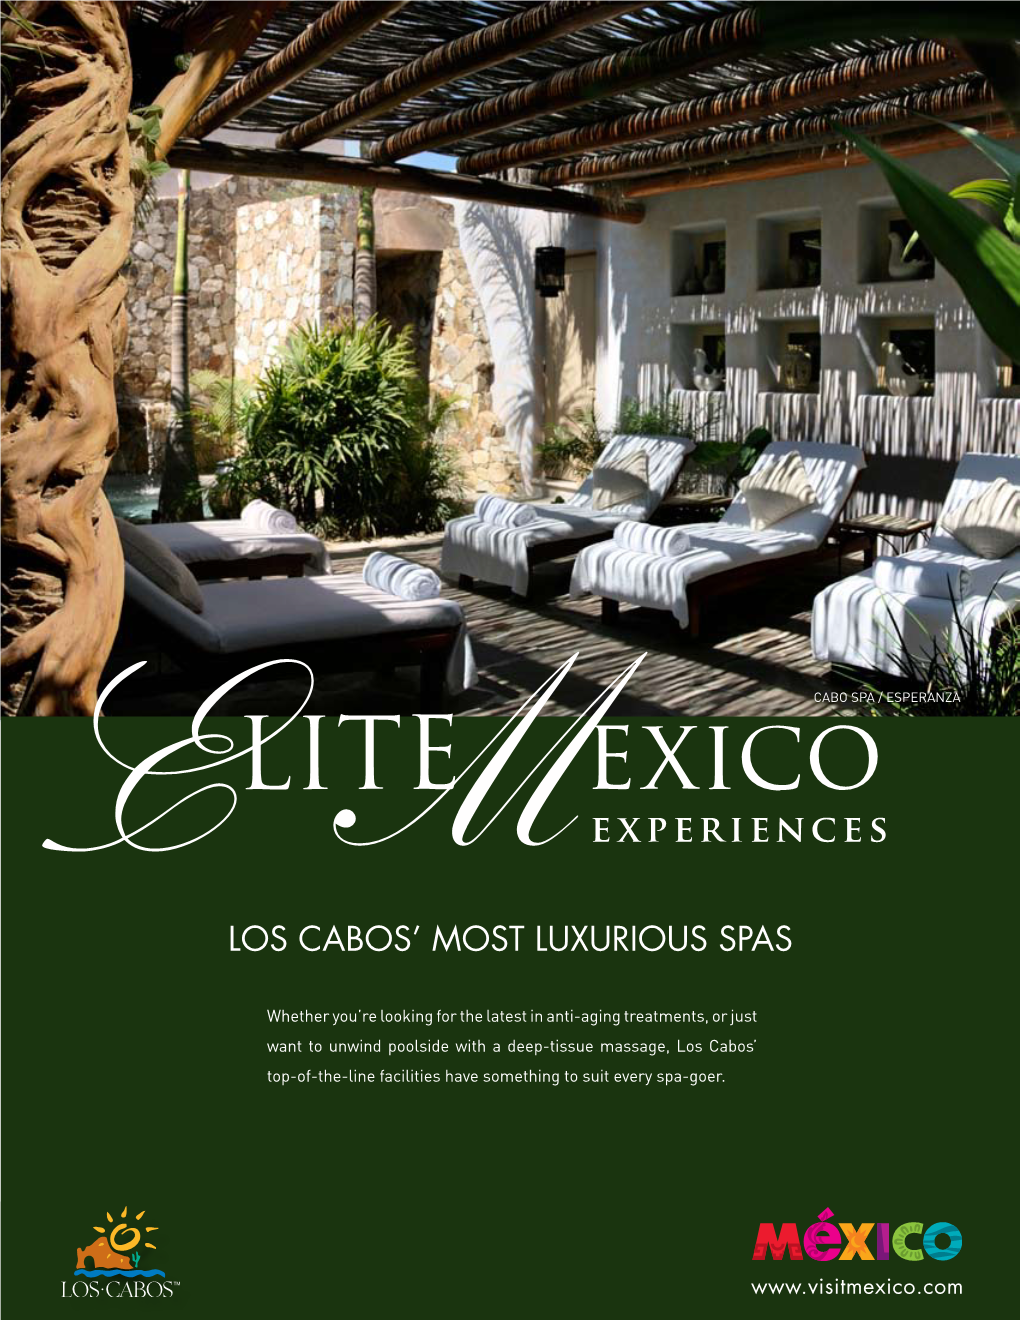 Los Cabos' Most Luxurious Spas